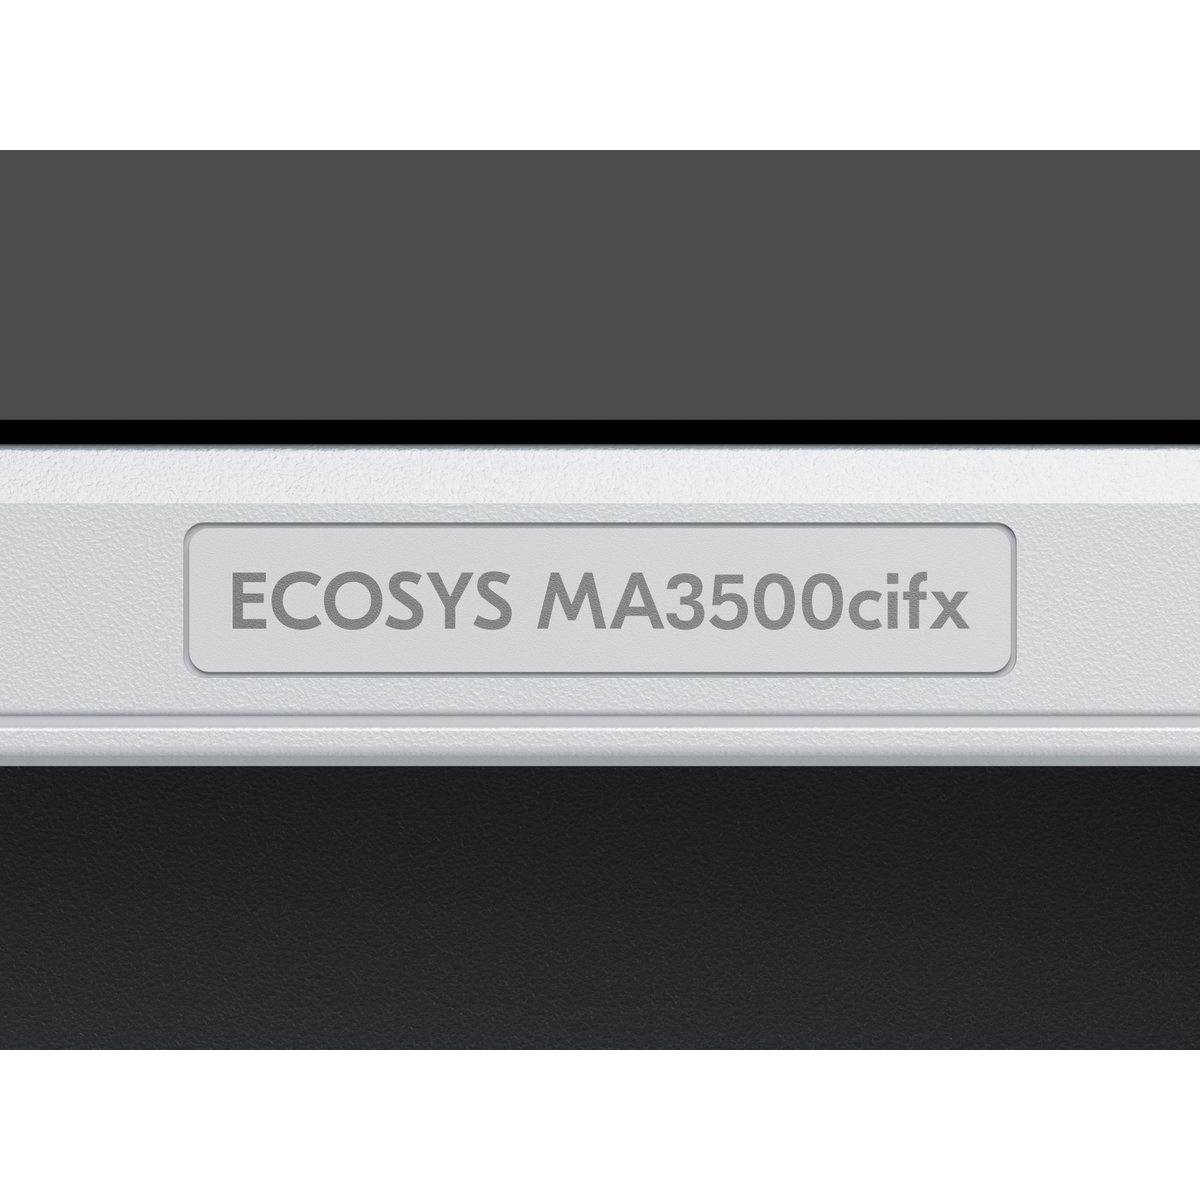 ECOSYS MA3500cifx A4 Colour MFP